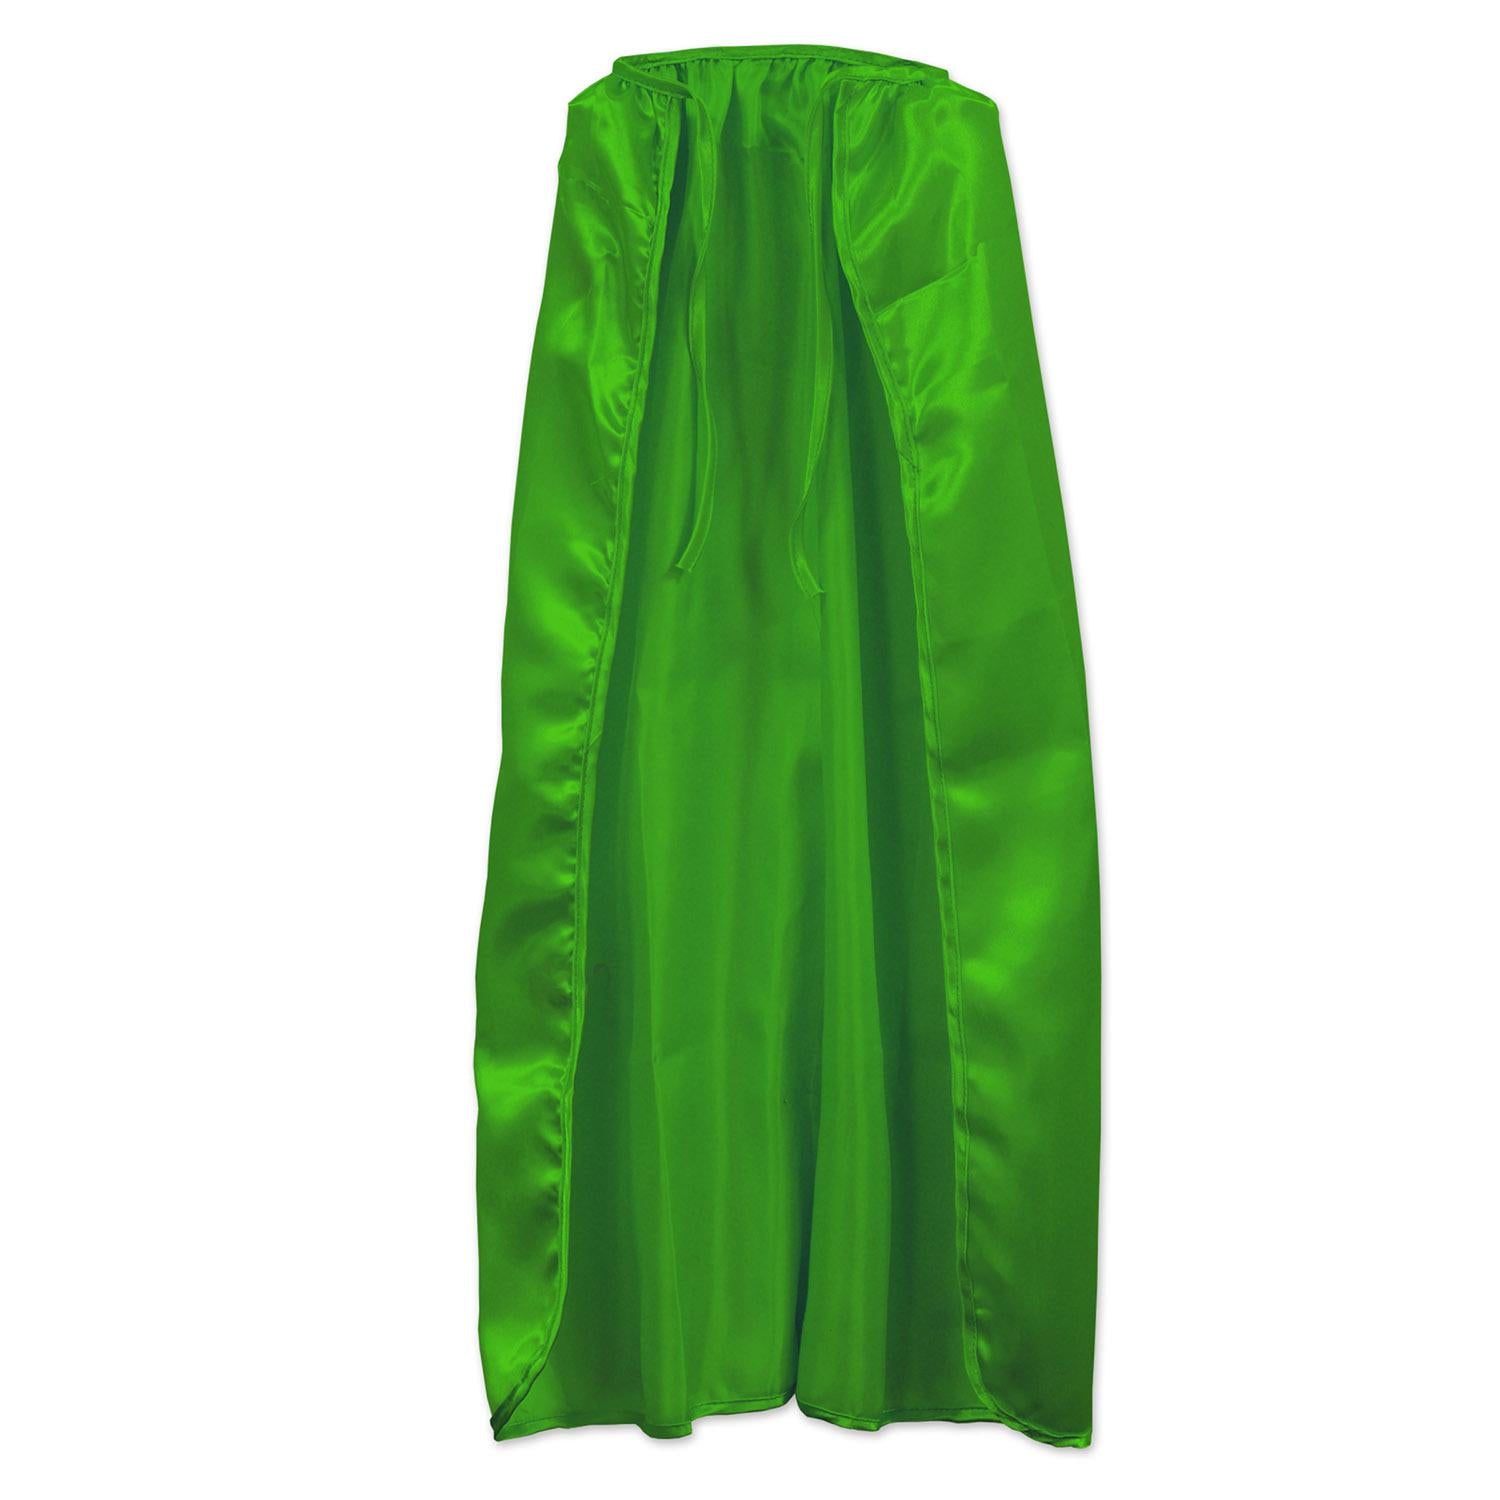 Beistle Fabric Cape - green - string-tie closure